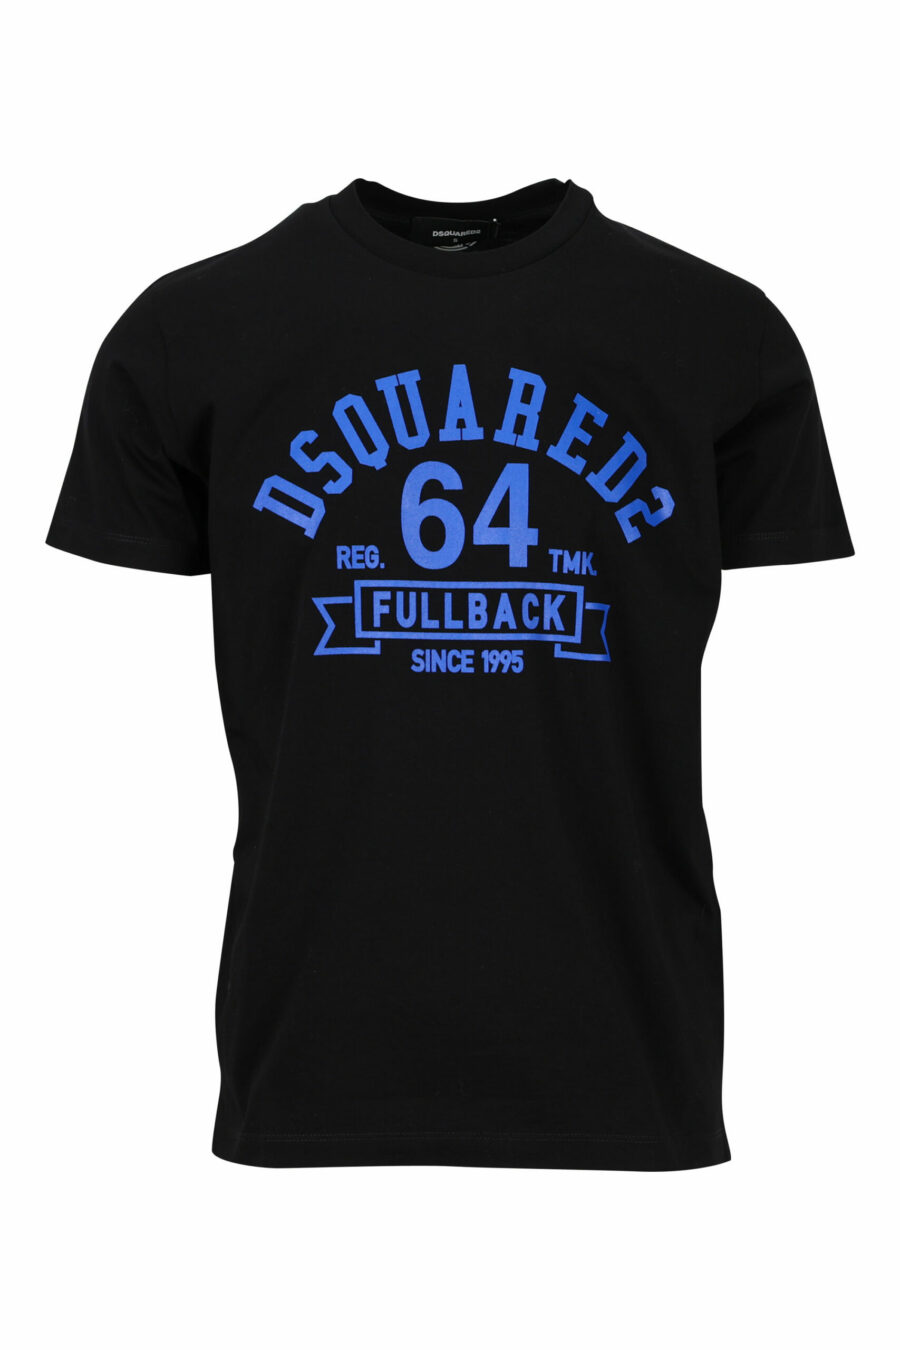 Camiseta negra con maxilogo "college" azul - 8054148086510 scaled